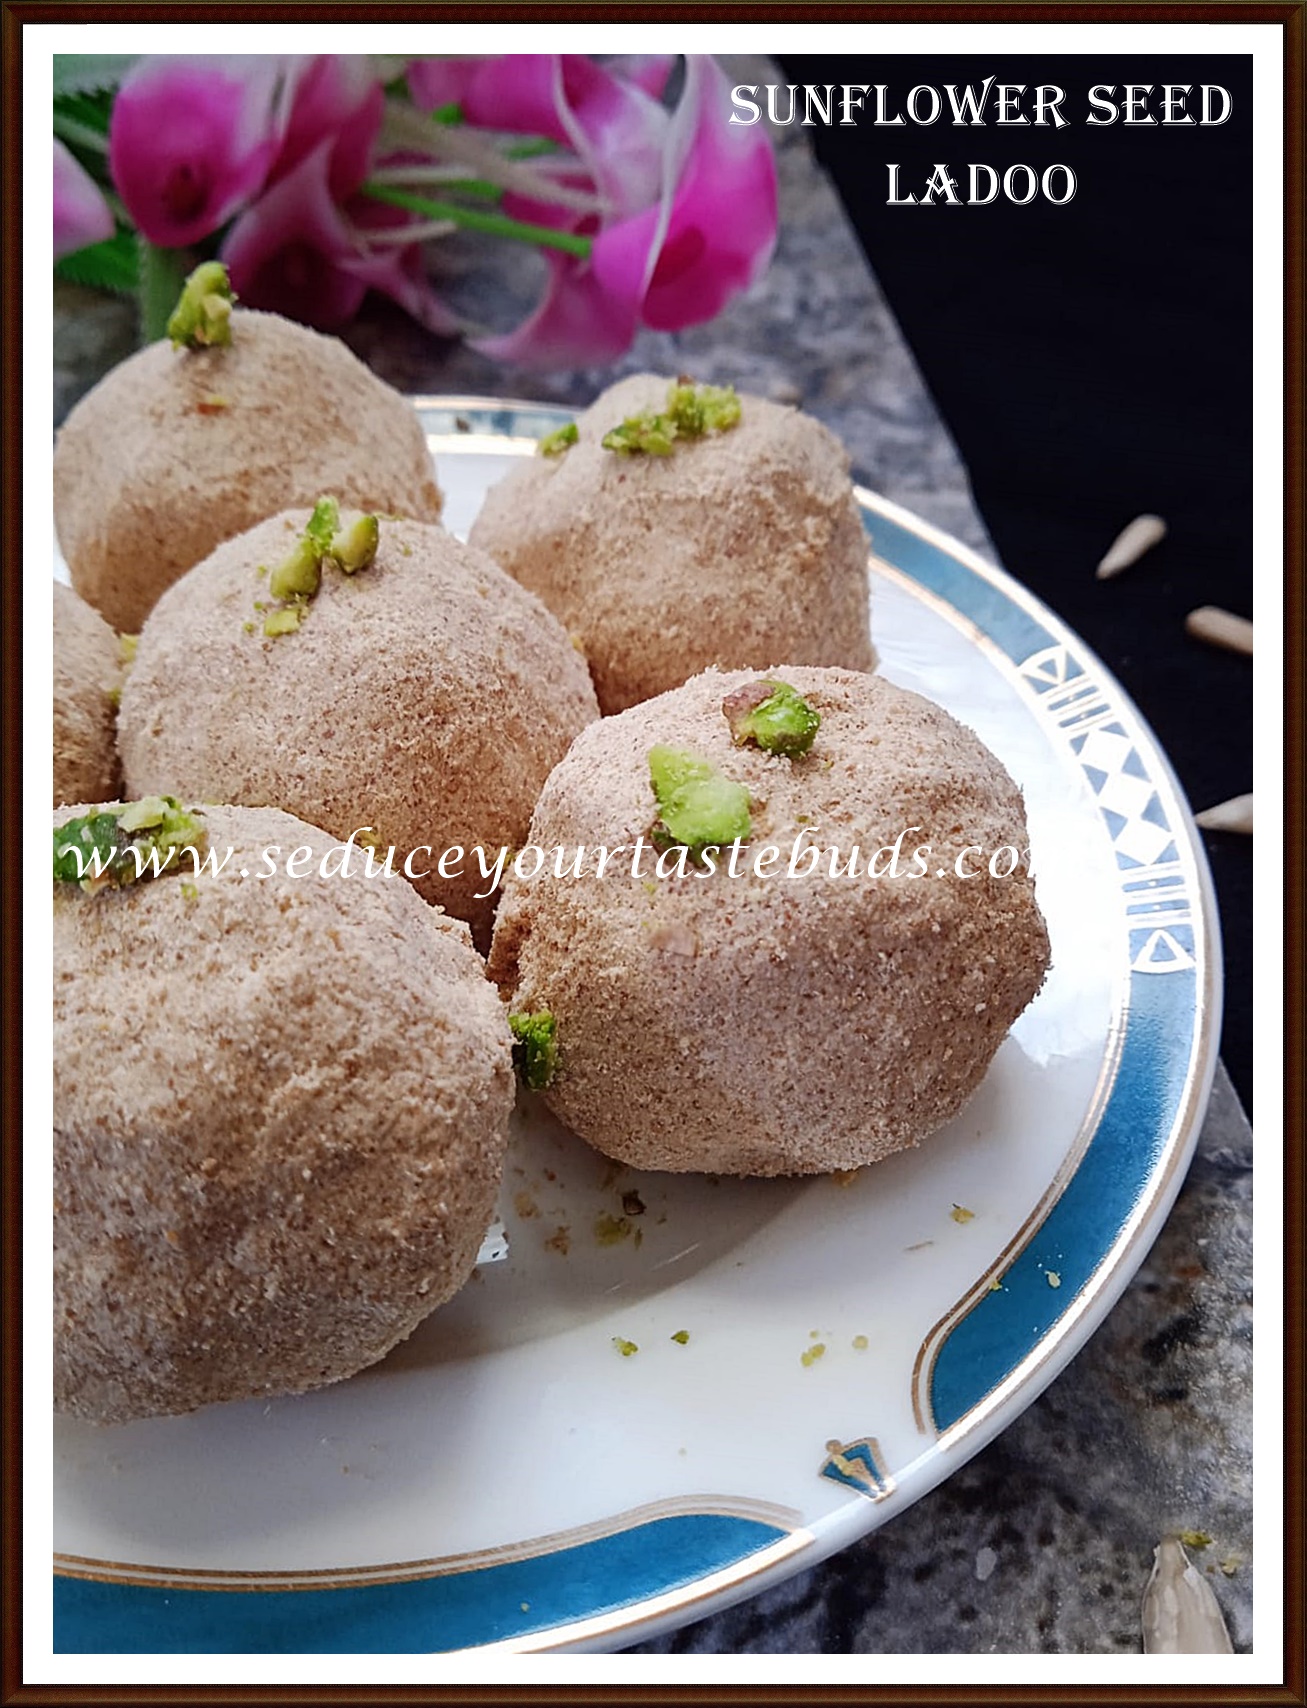 Sunflower Seed Ladoo|Engery Balls Recipe